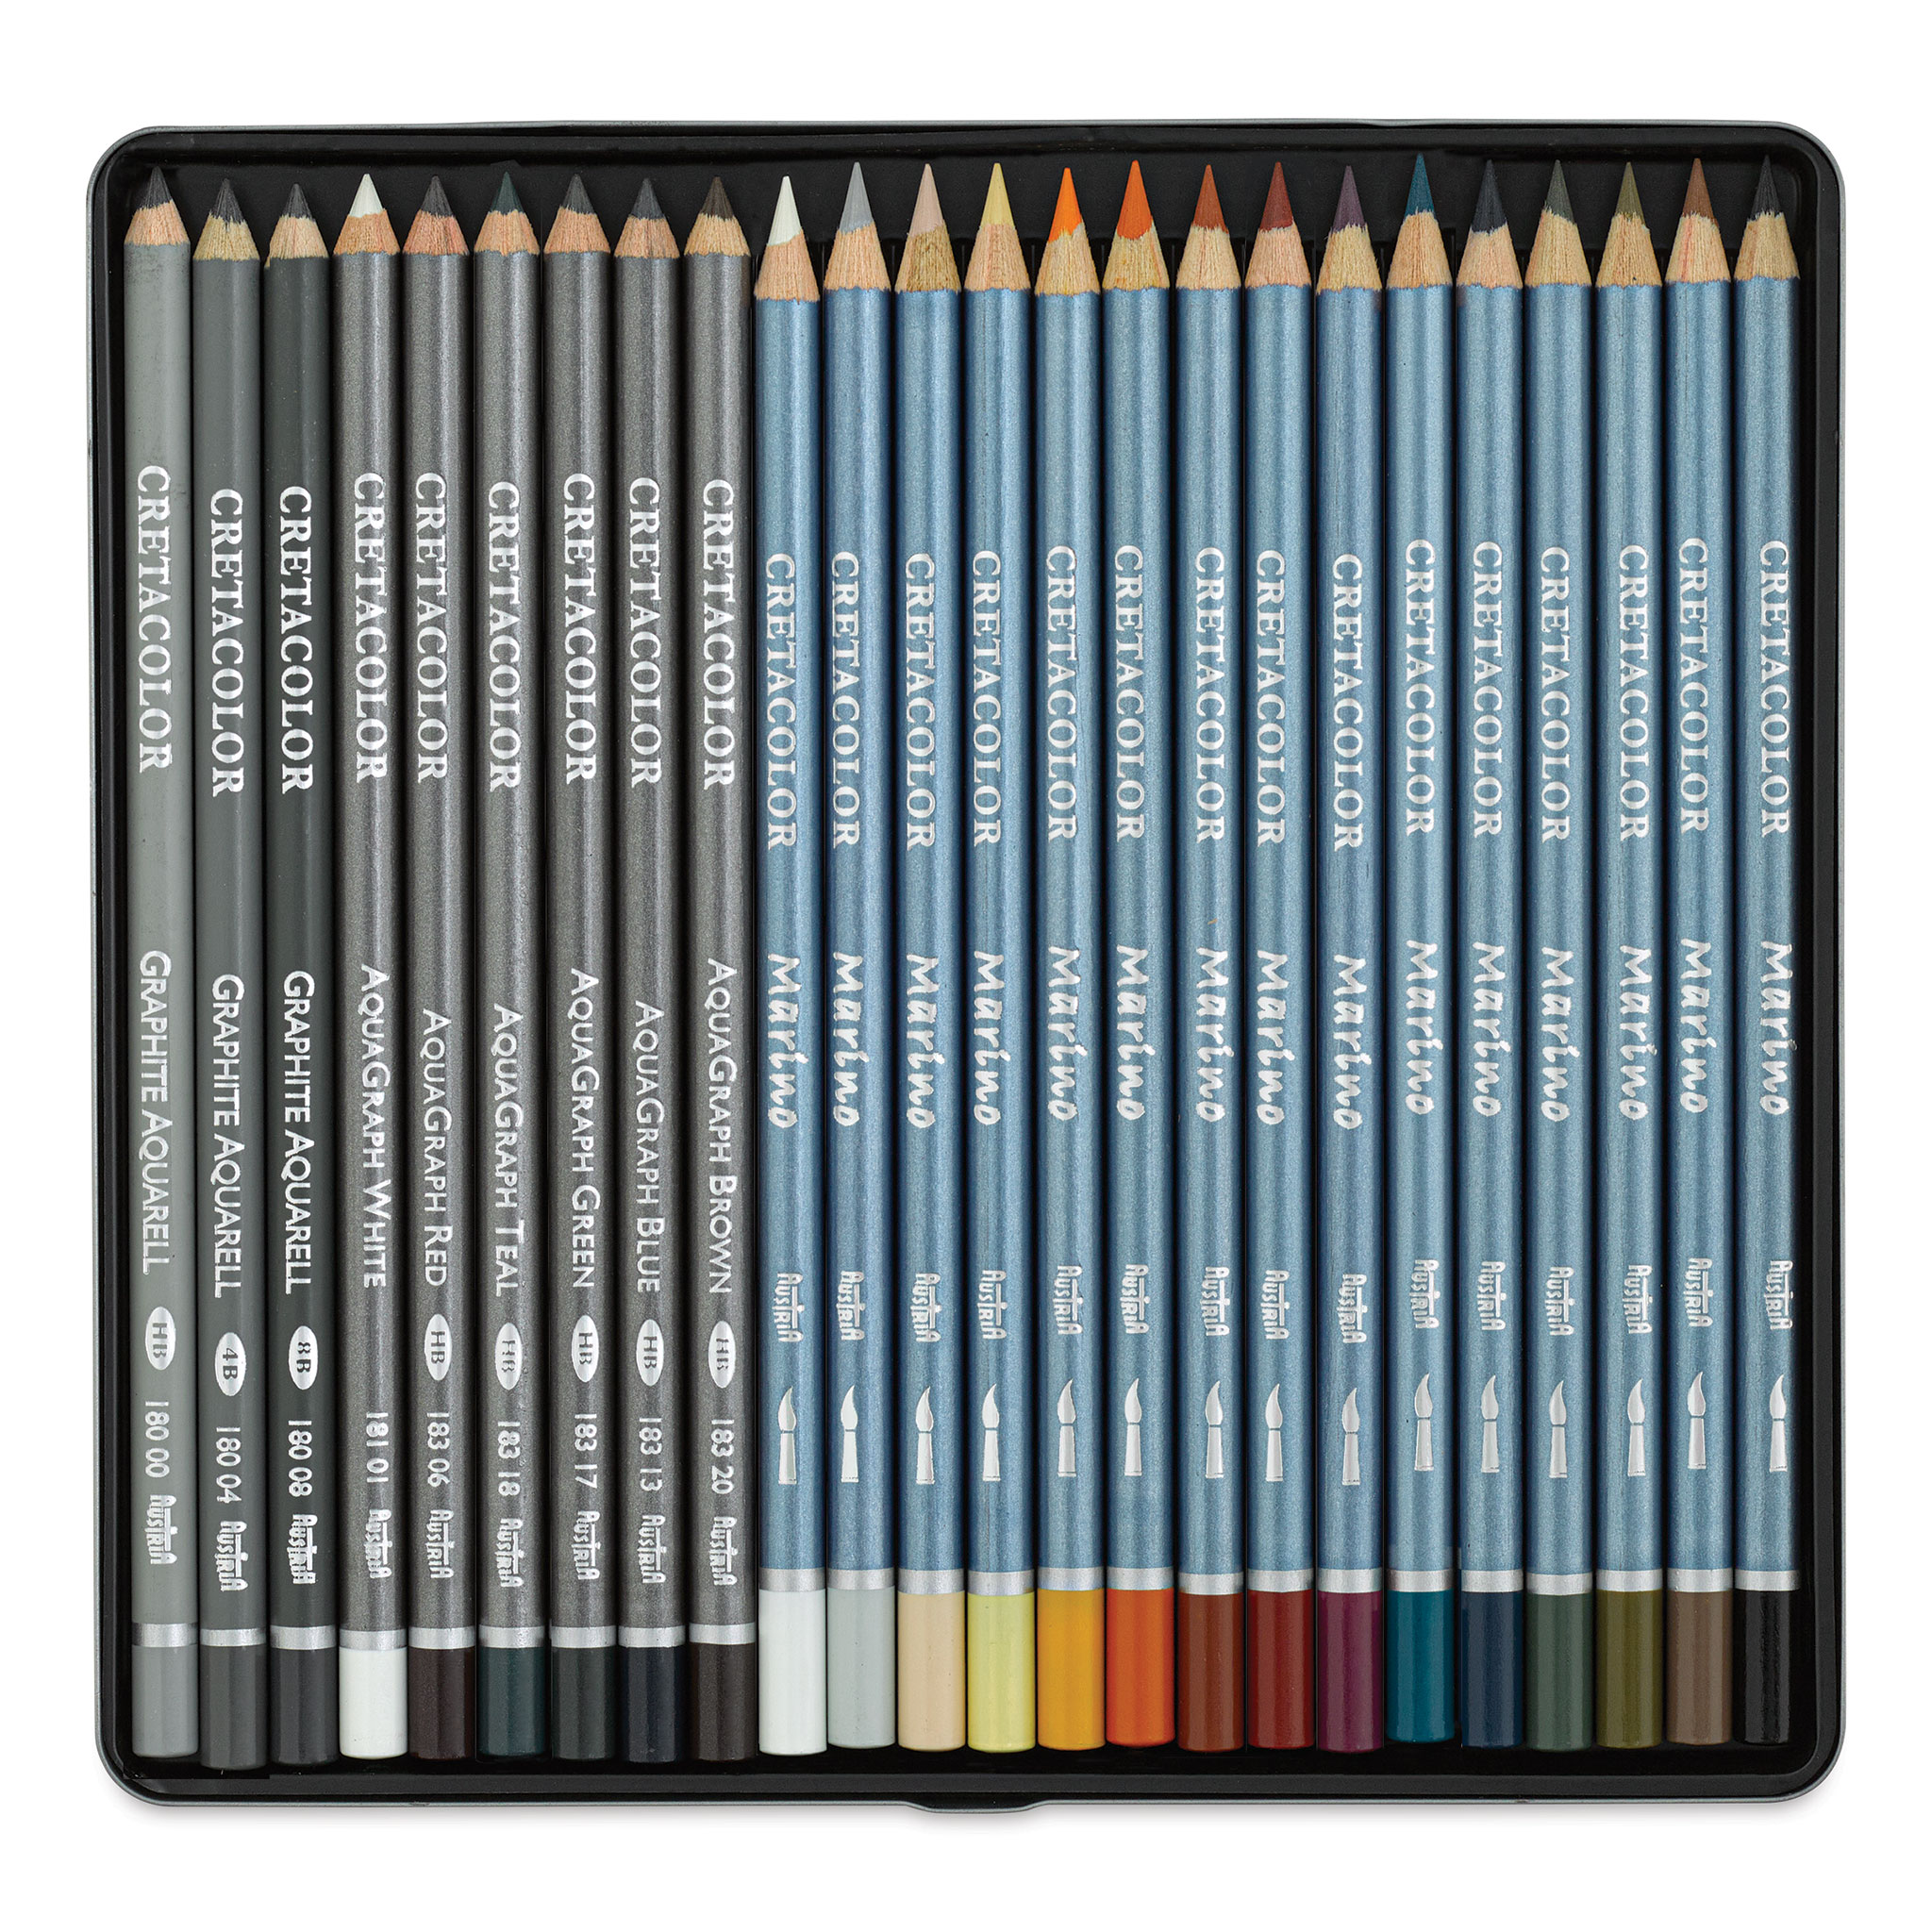 H & B Sketch Set, Colored Sketching Pencils, Watercolor & Metallic